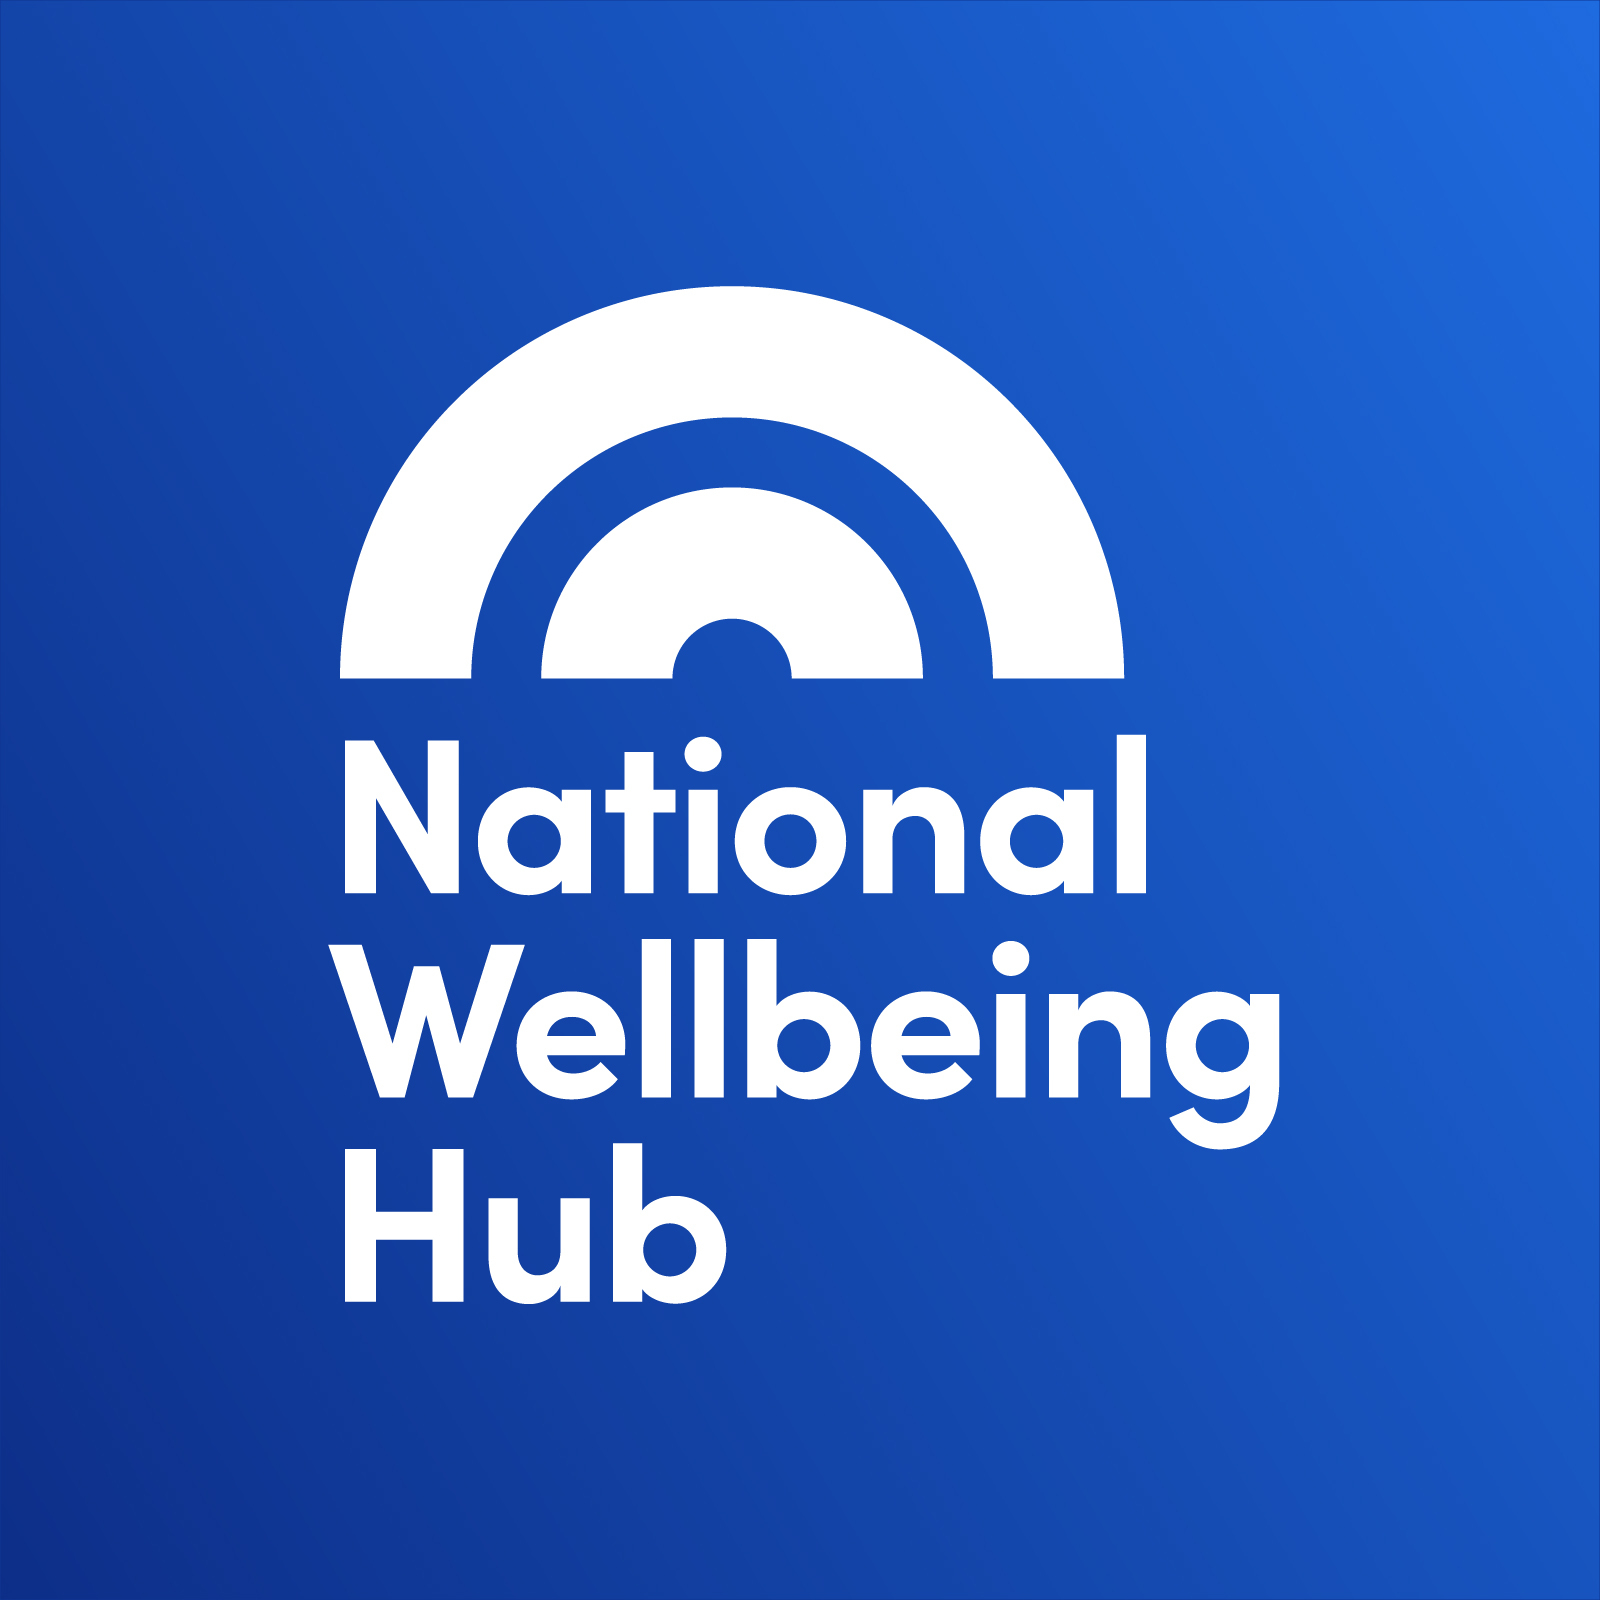 National Wellbeing Hub logo on a dark blue background